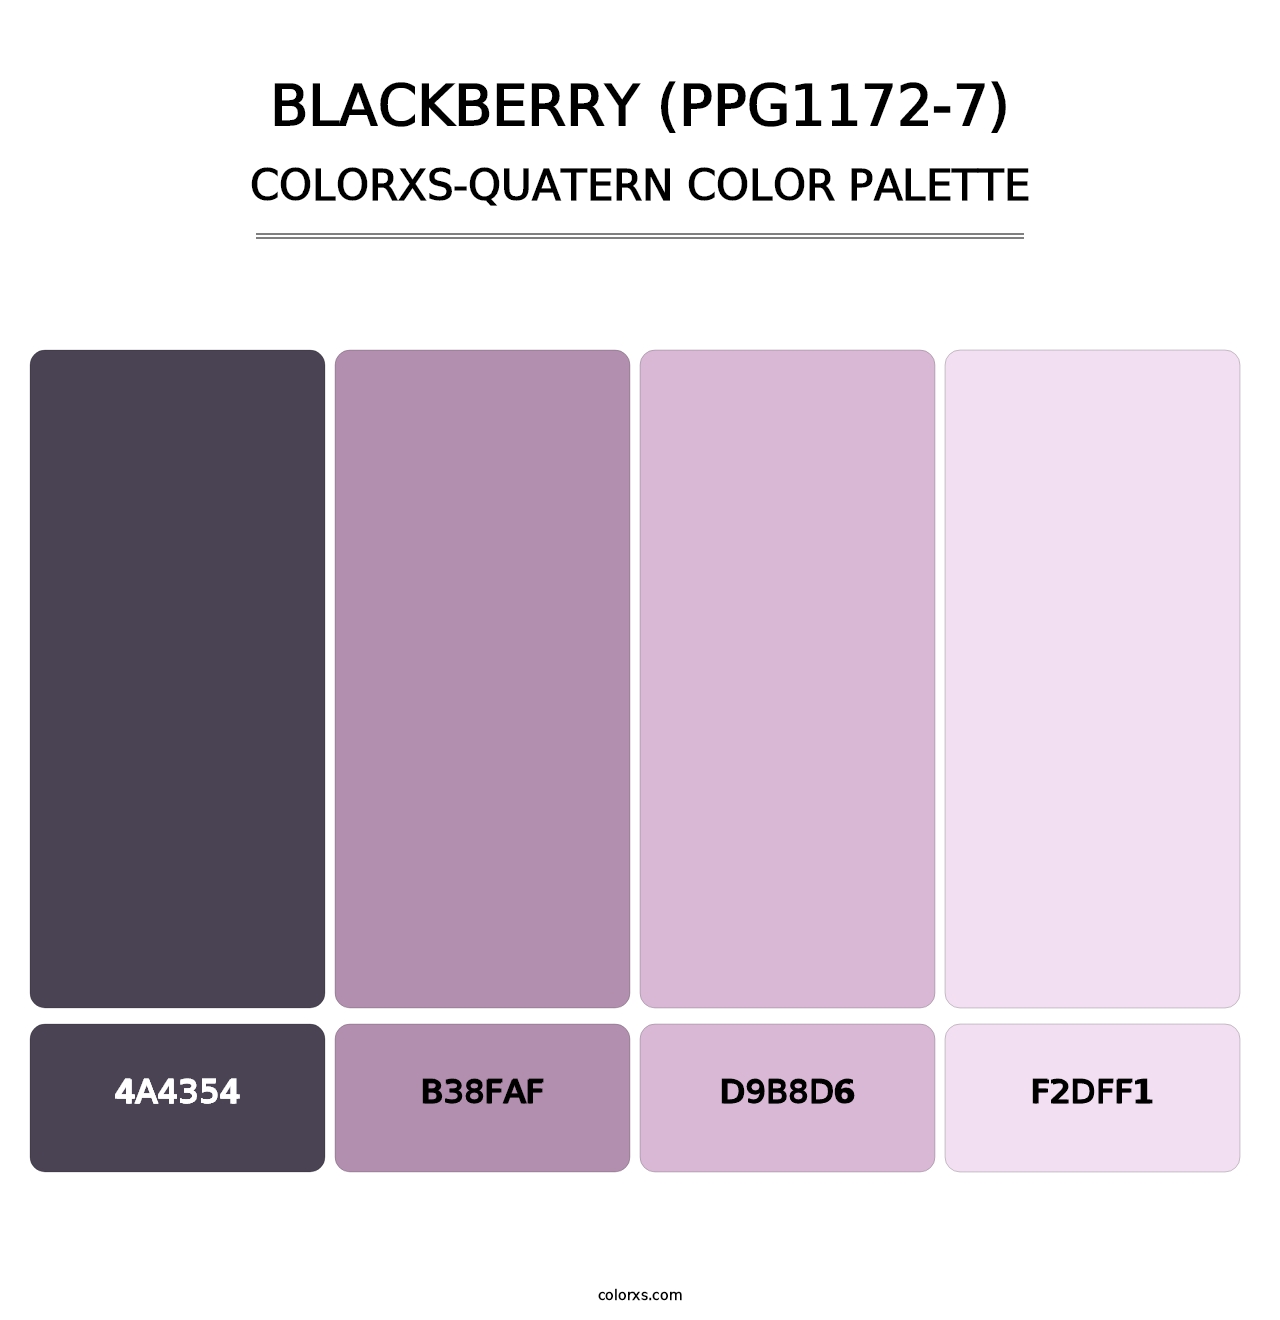 Blackberry (PPG1172-7) - Colorxs Quatern Palette